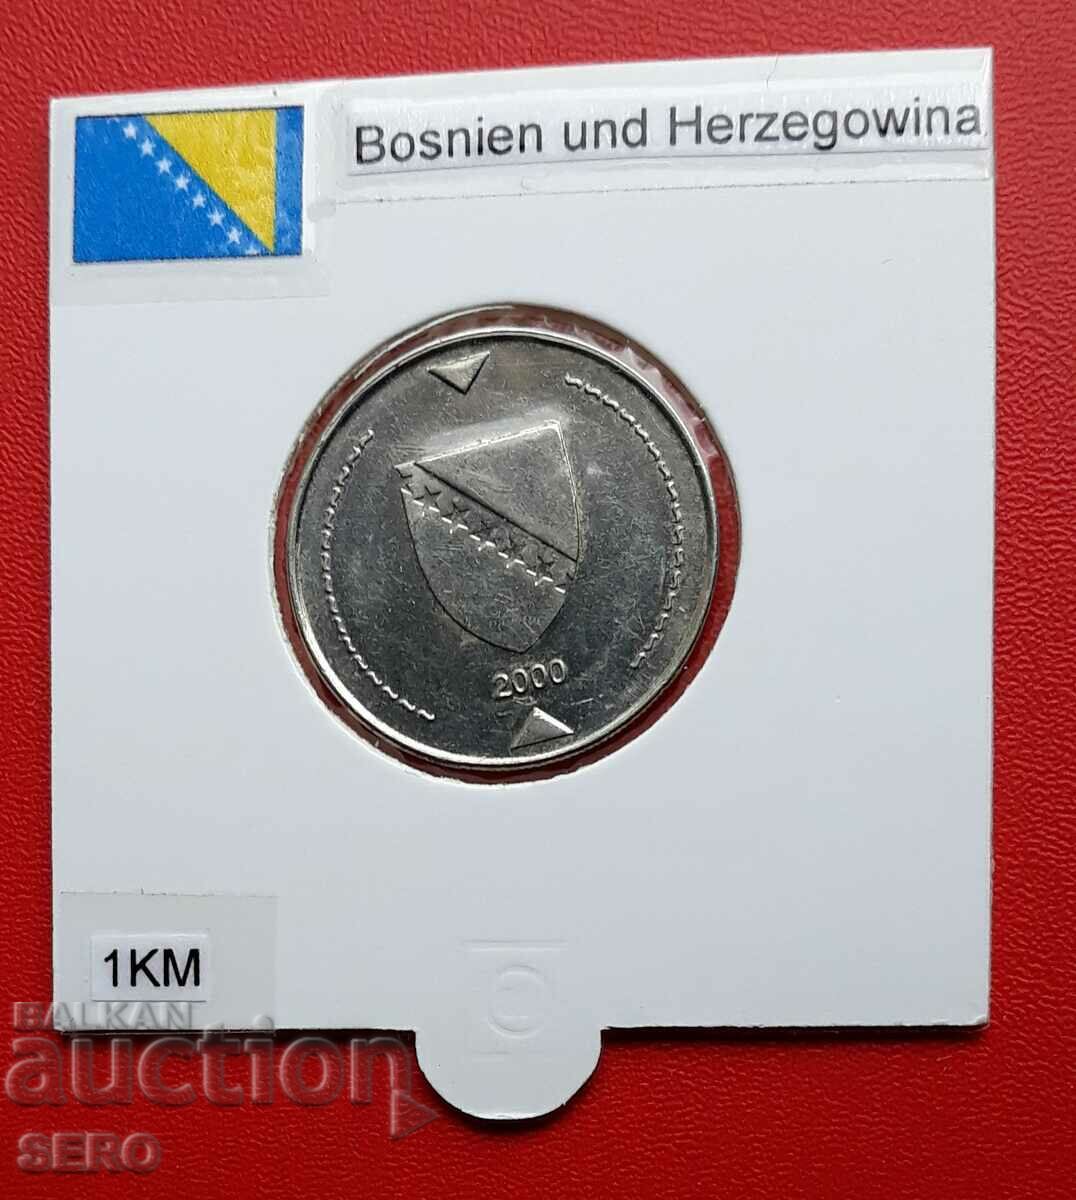 Bosnia and Herzegovina-1 mark 2000